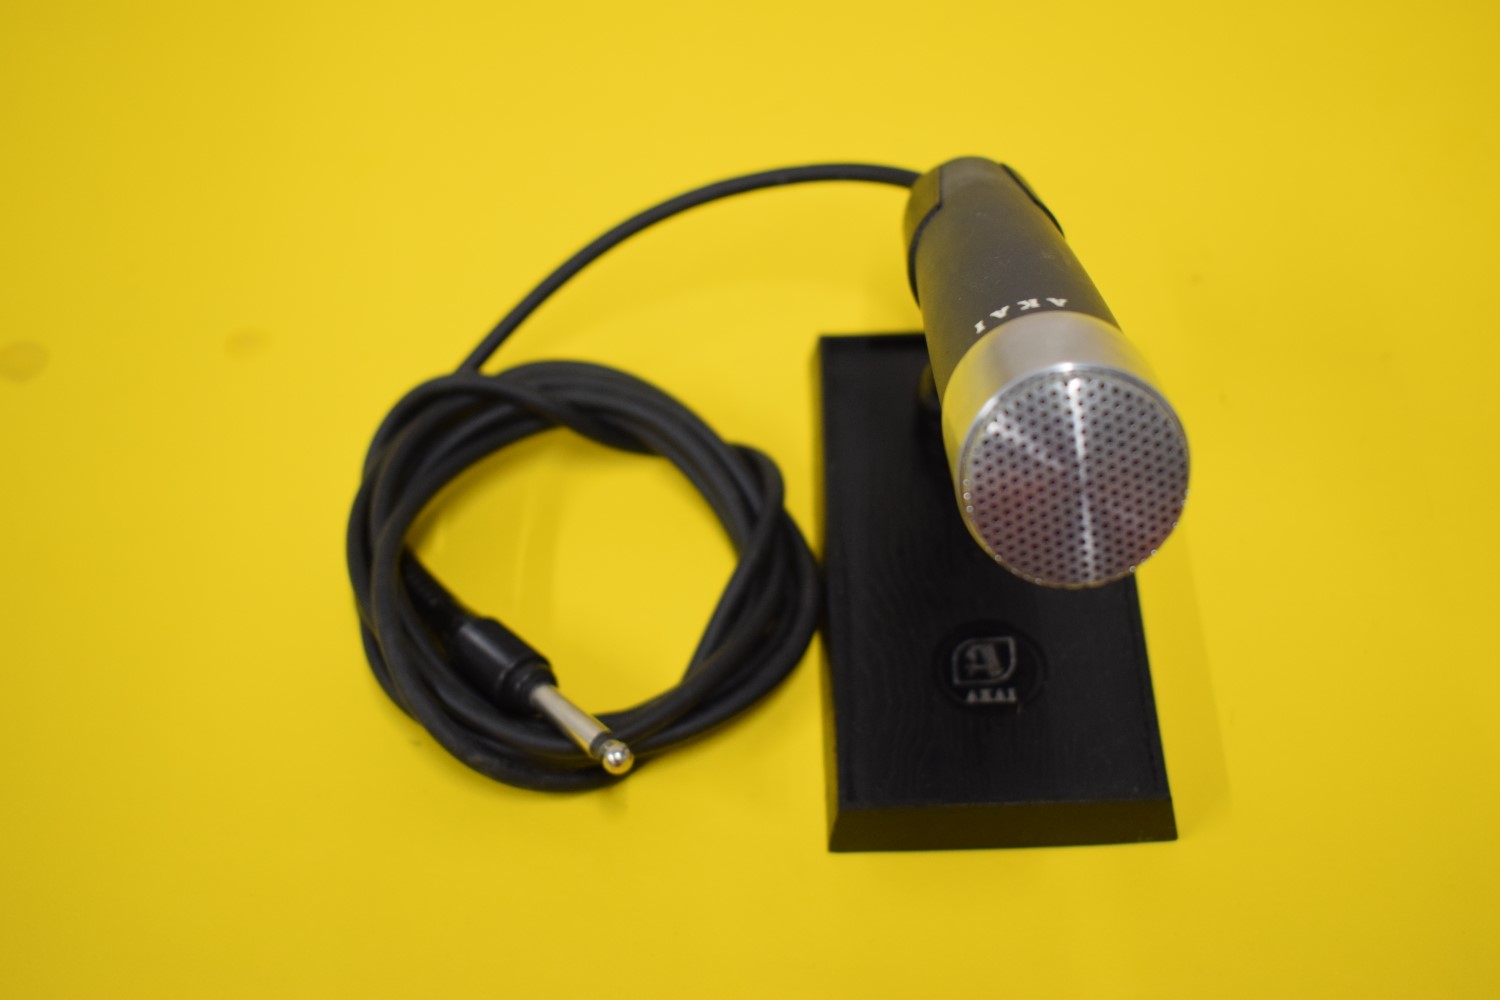 Akai DM-13 Microfoon – Originele Verpakking